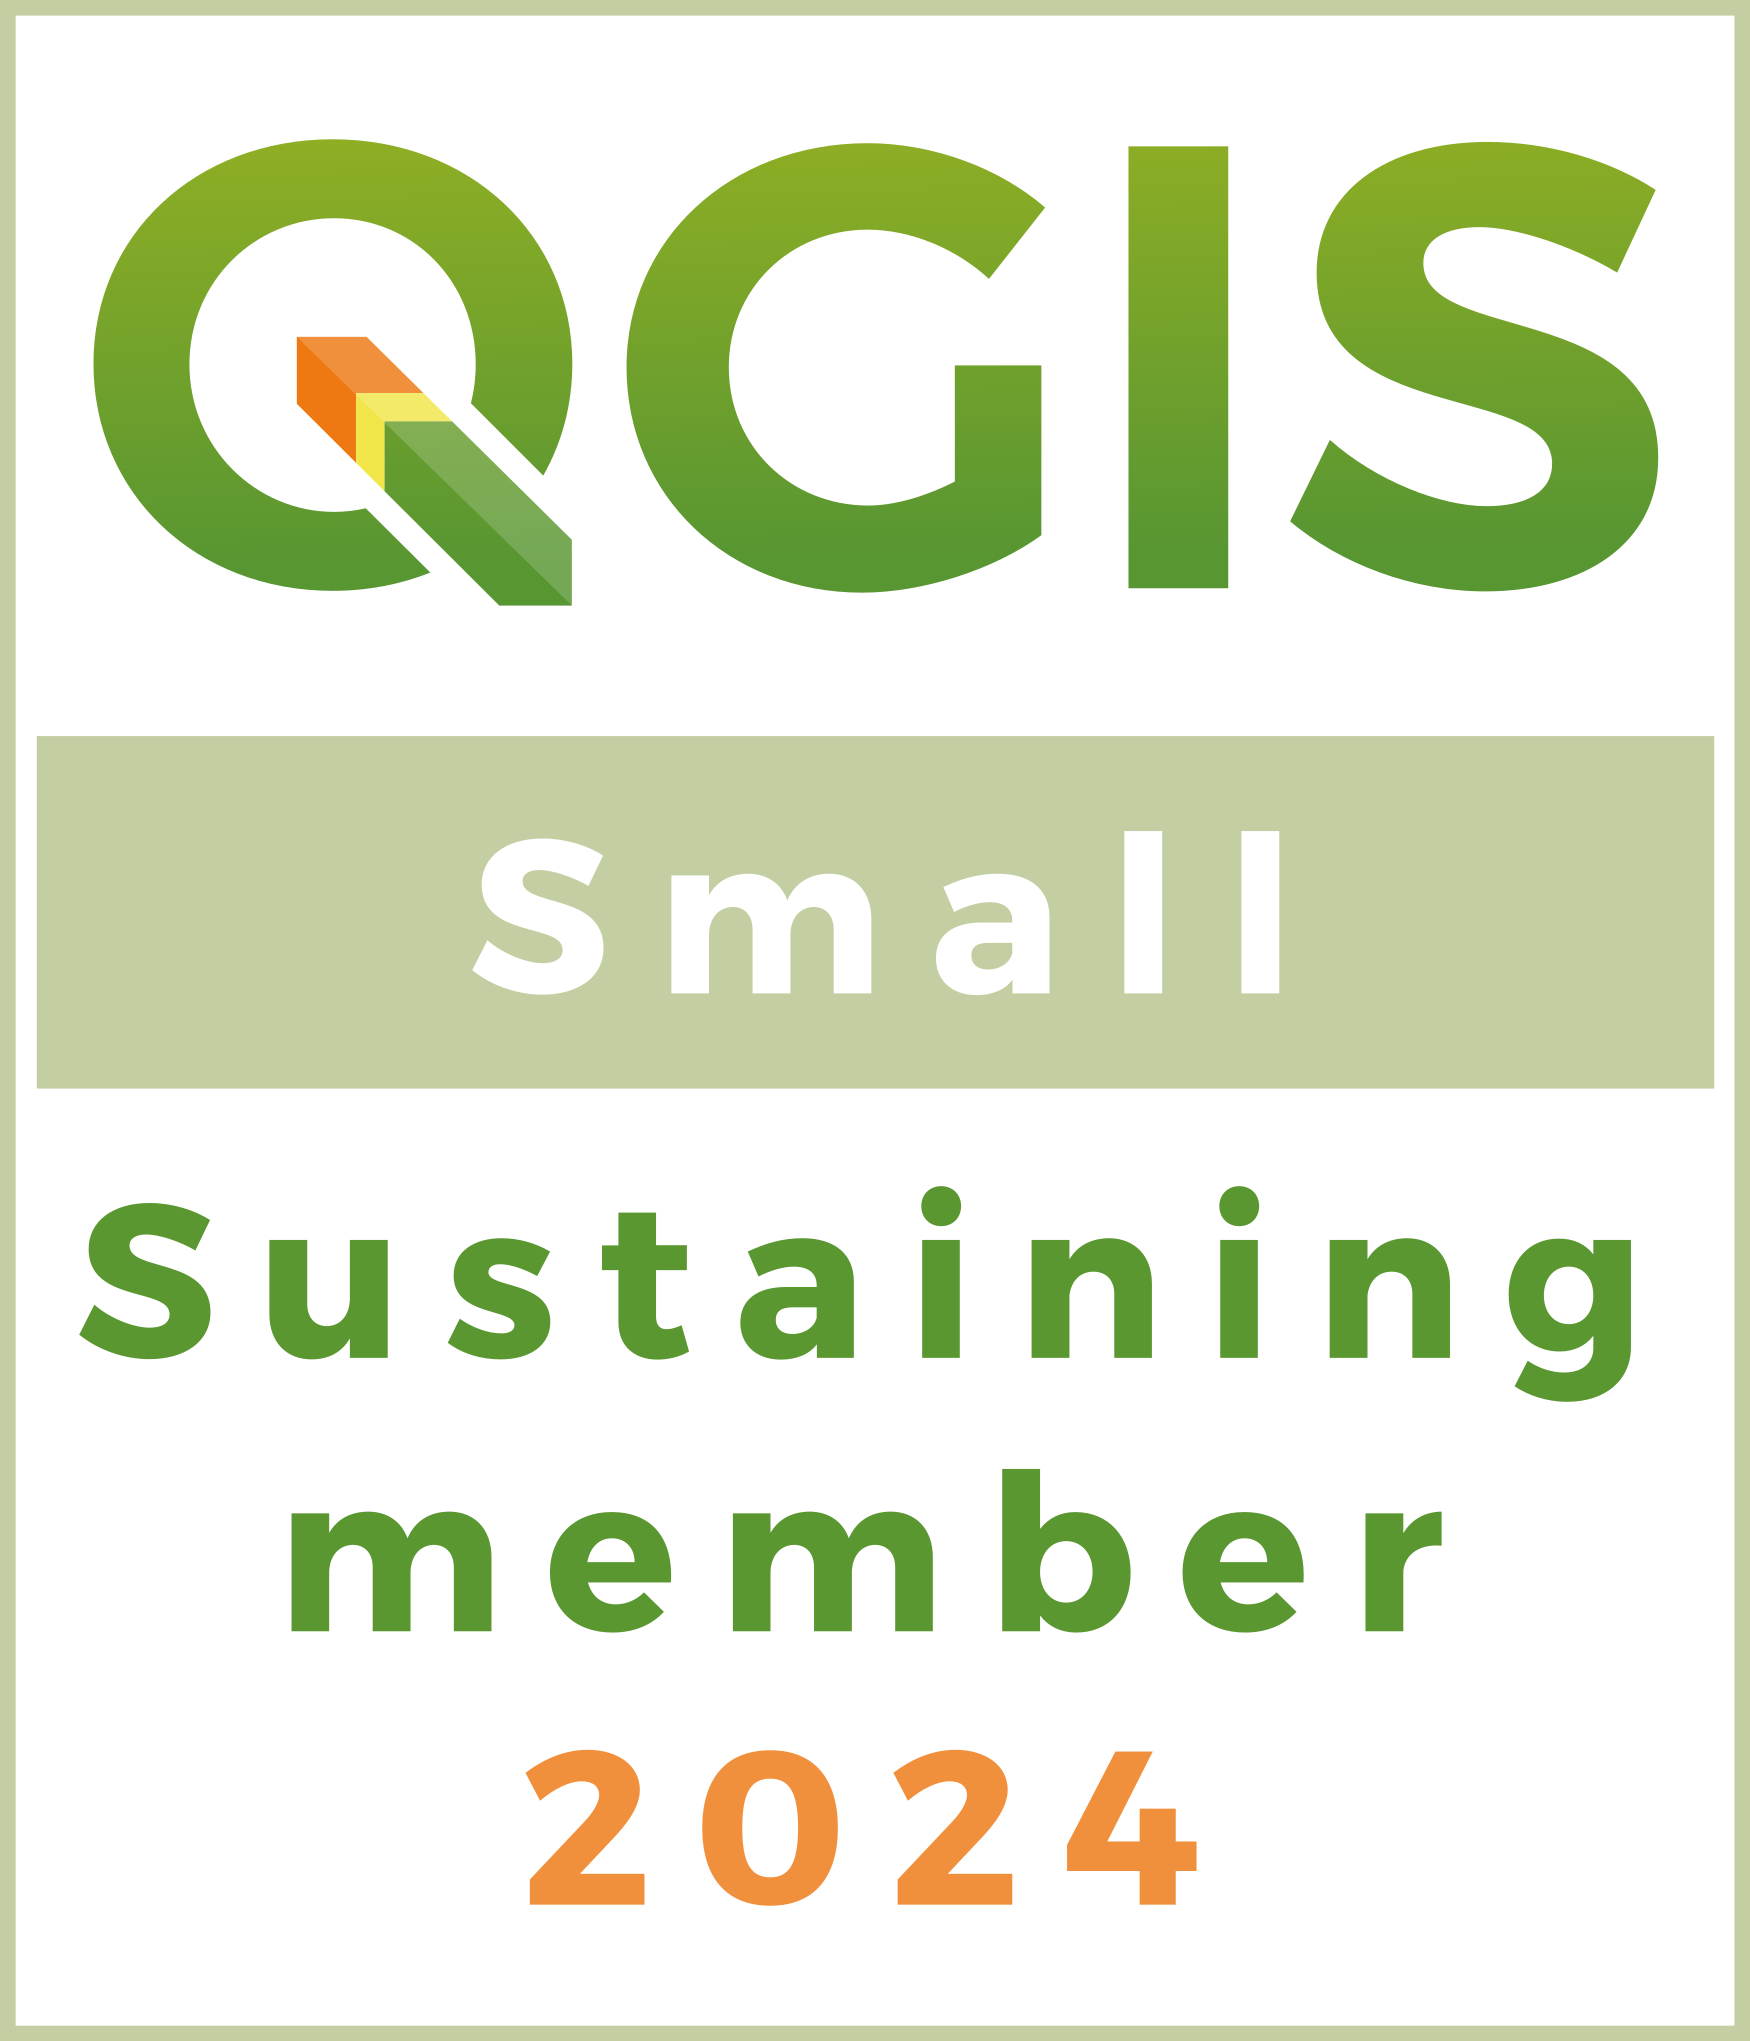 qgis small sustaining member 2024 highres